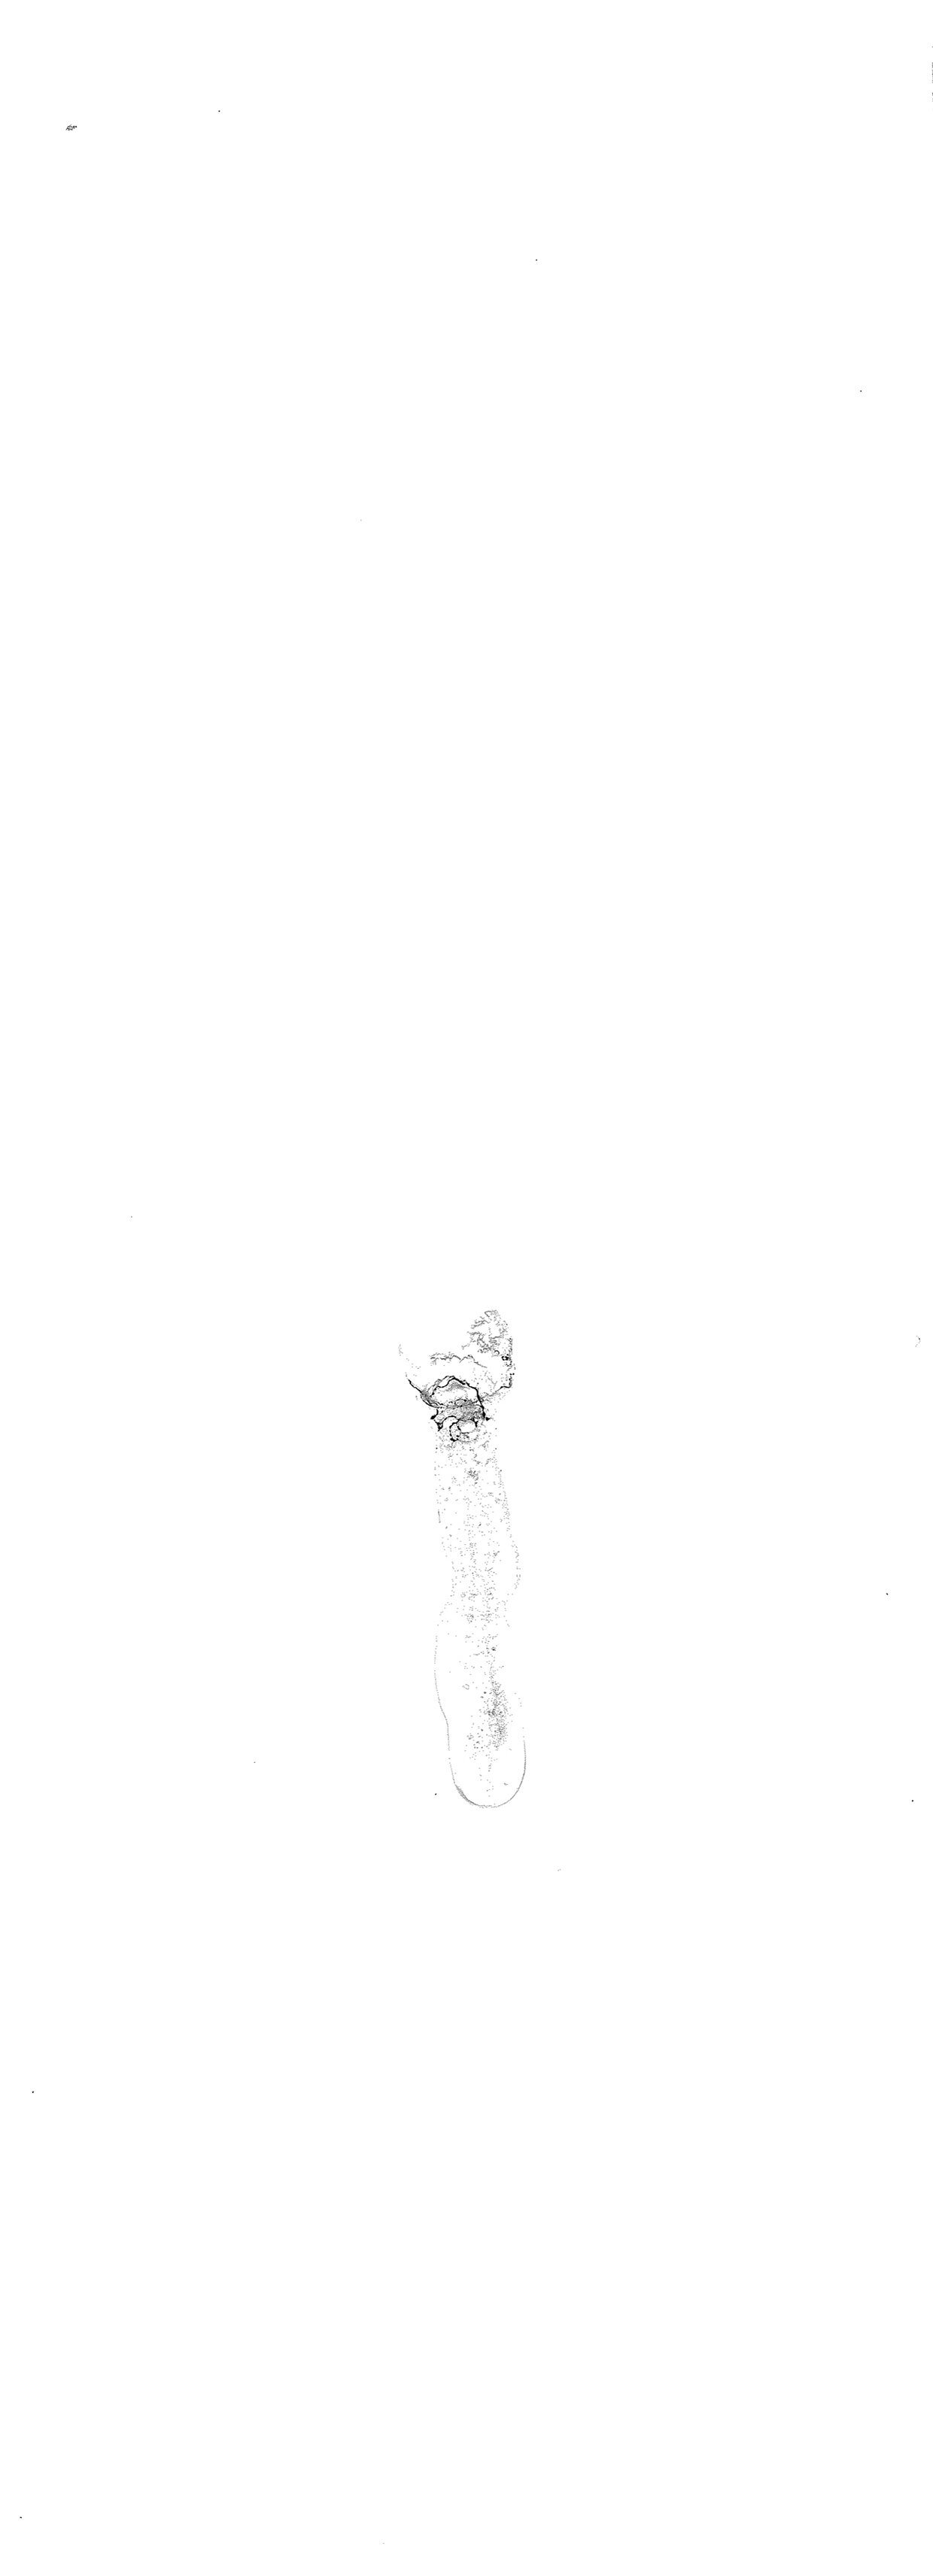 10Enza Galantini, SFD#24, 2017, ink on photographic paper, 29x10,5 cm.jpg